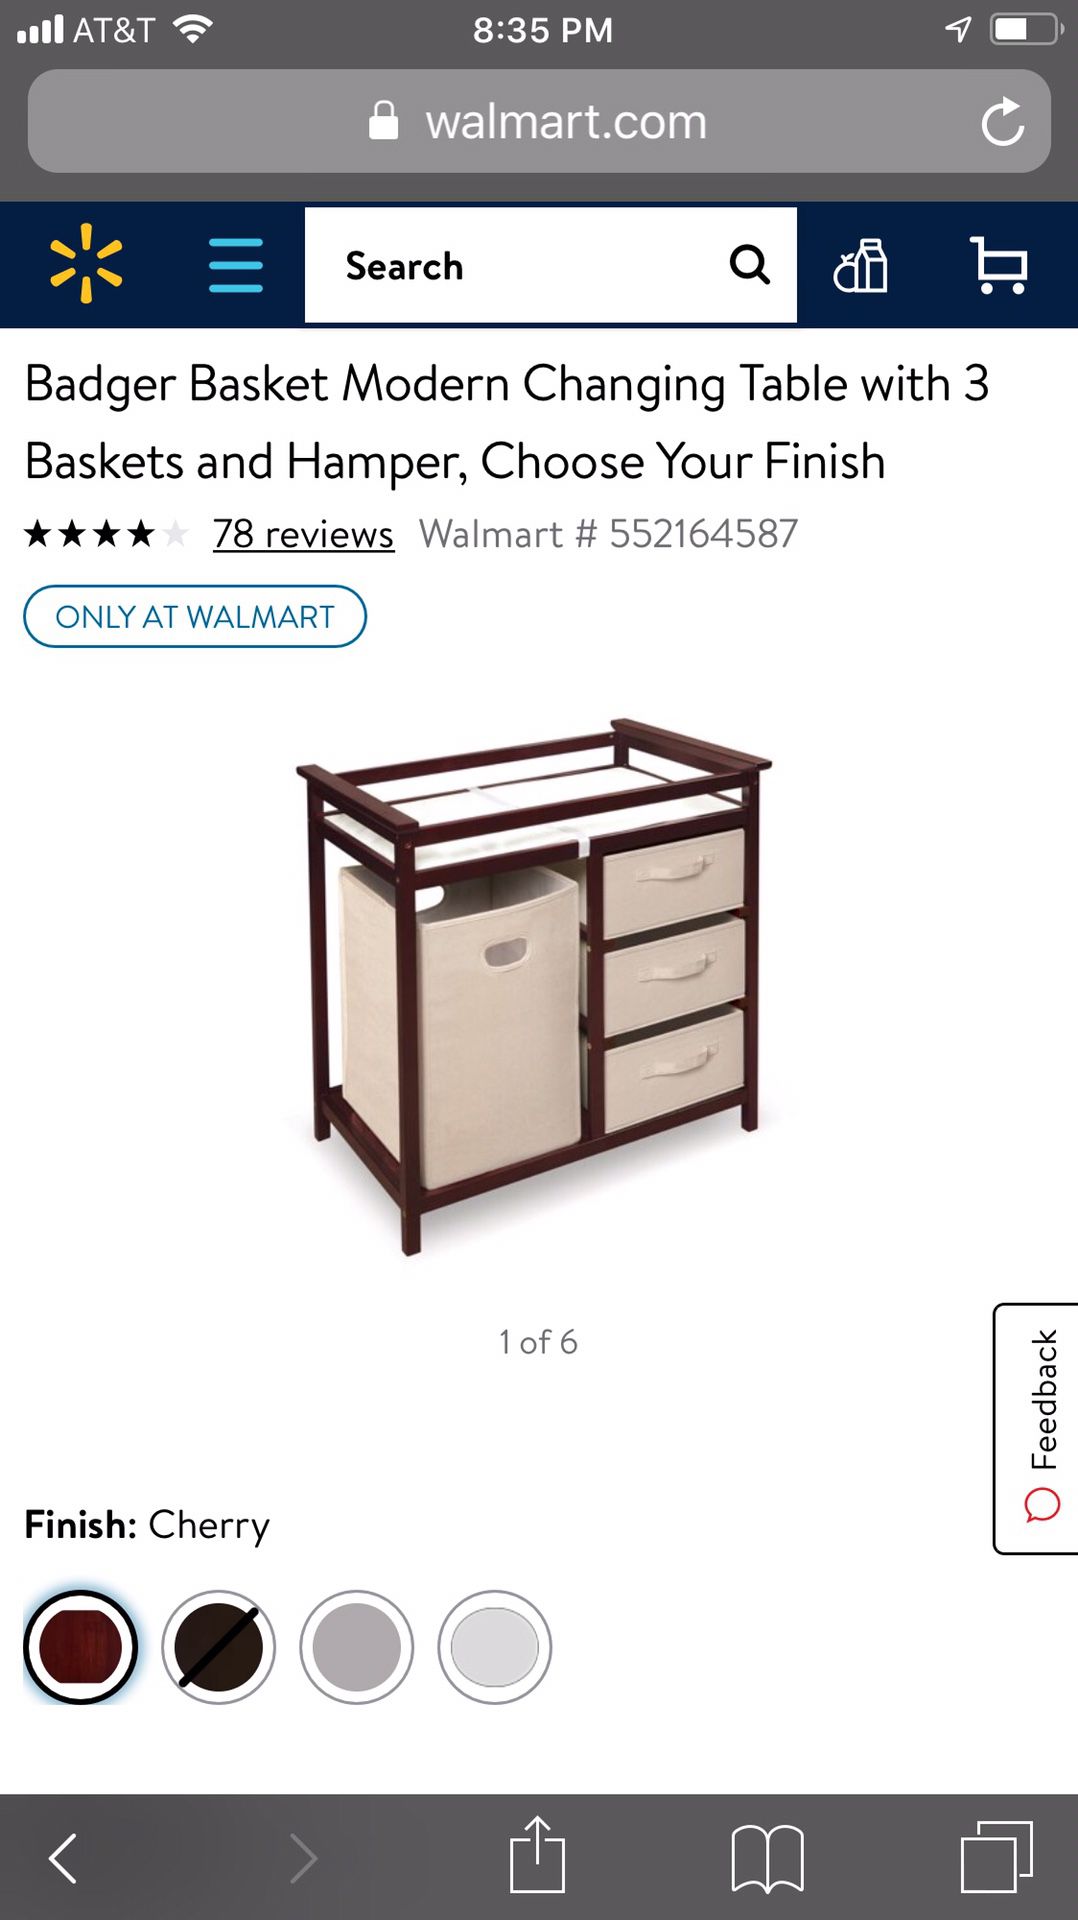 Badger basket changing table with laundry hamper, 3 storage baskets